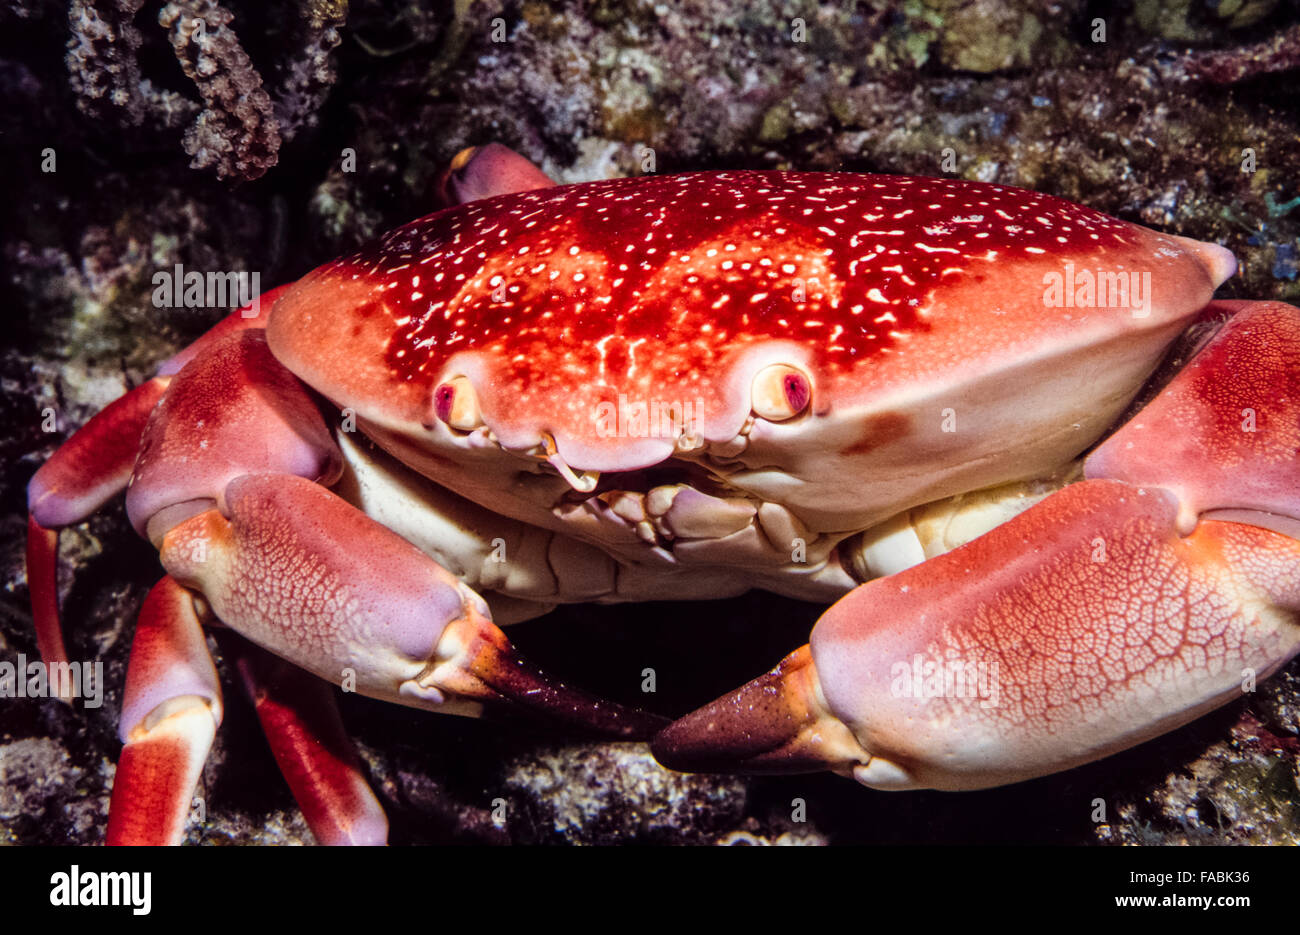 Carpilius corallinus or Batwing Coral Crab on coral reef in Caribbean Stock Photo